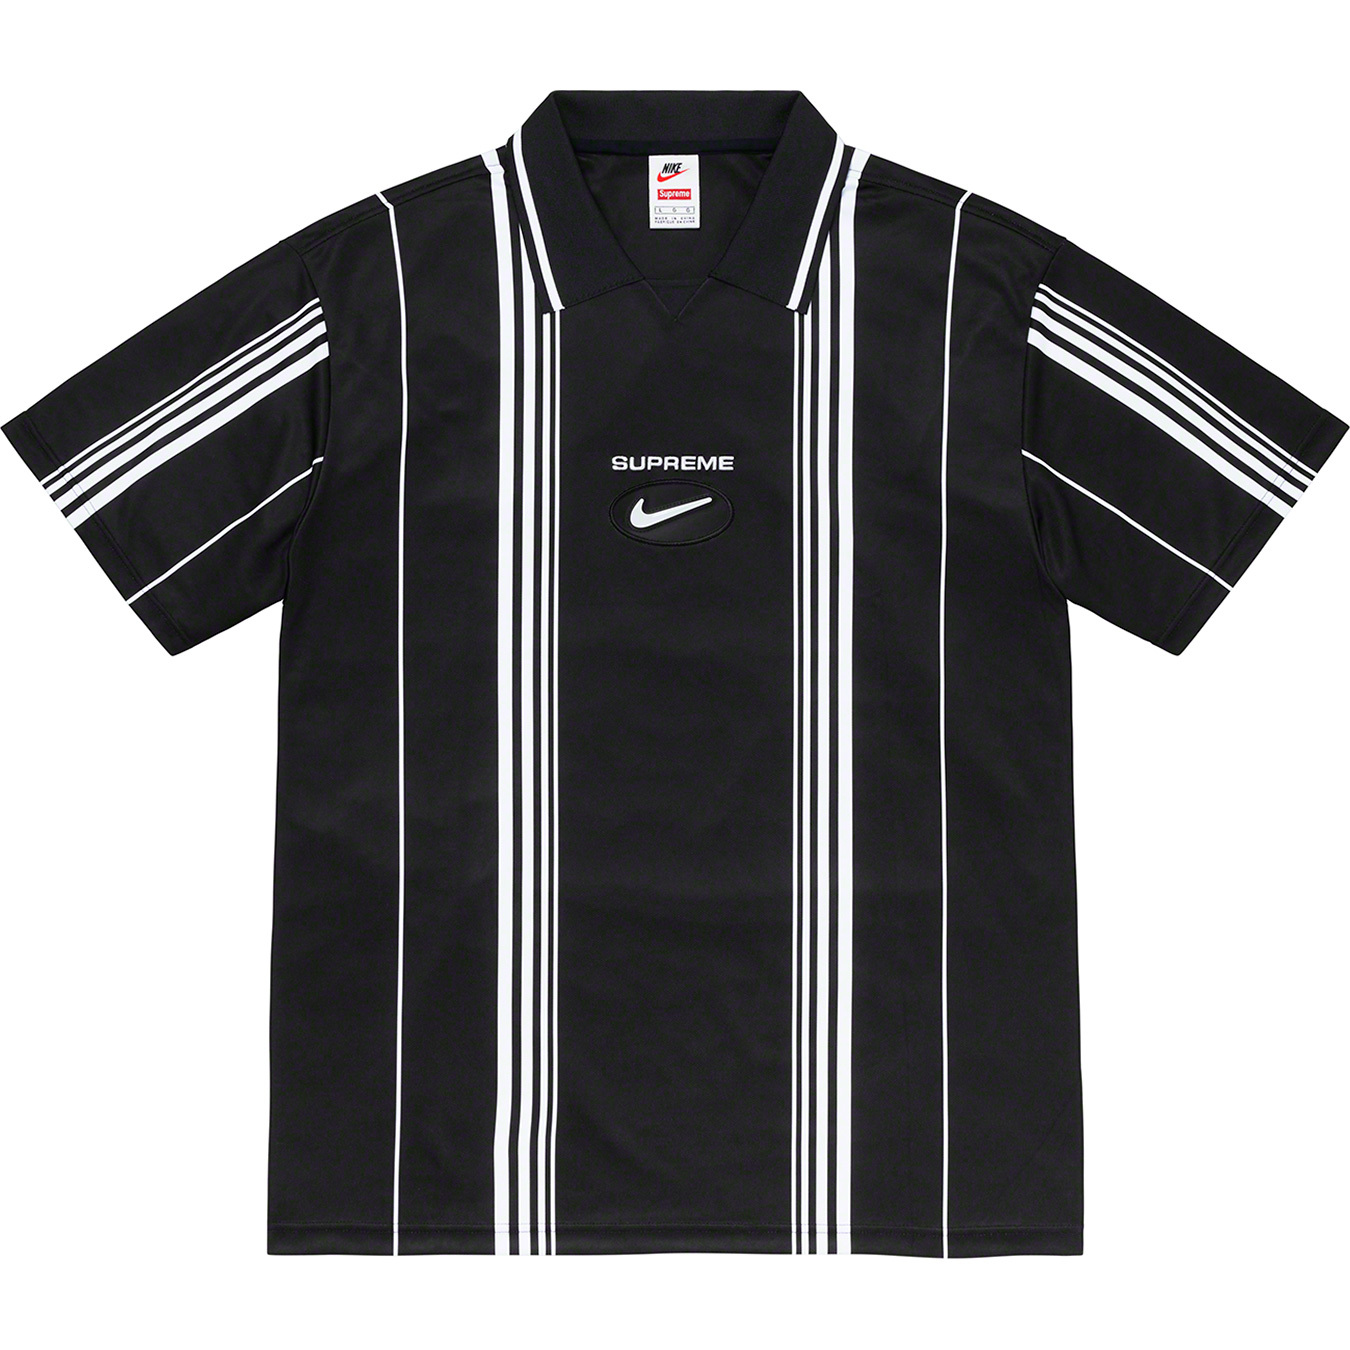 Supreme®/Nike® Jewel Stripe Soccer Jersey | Supreme 20fw